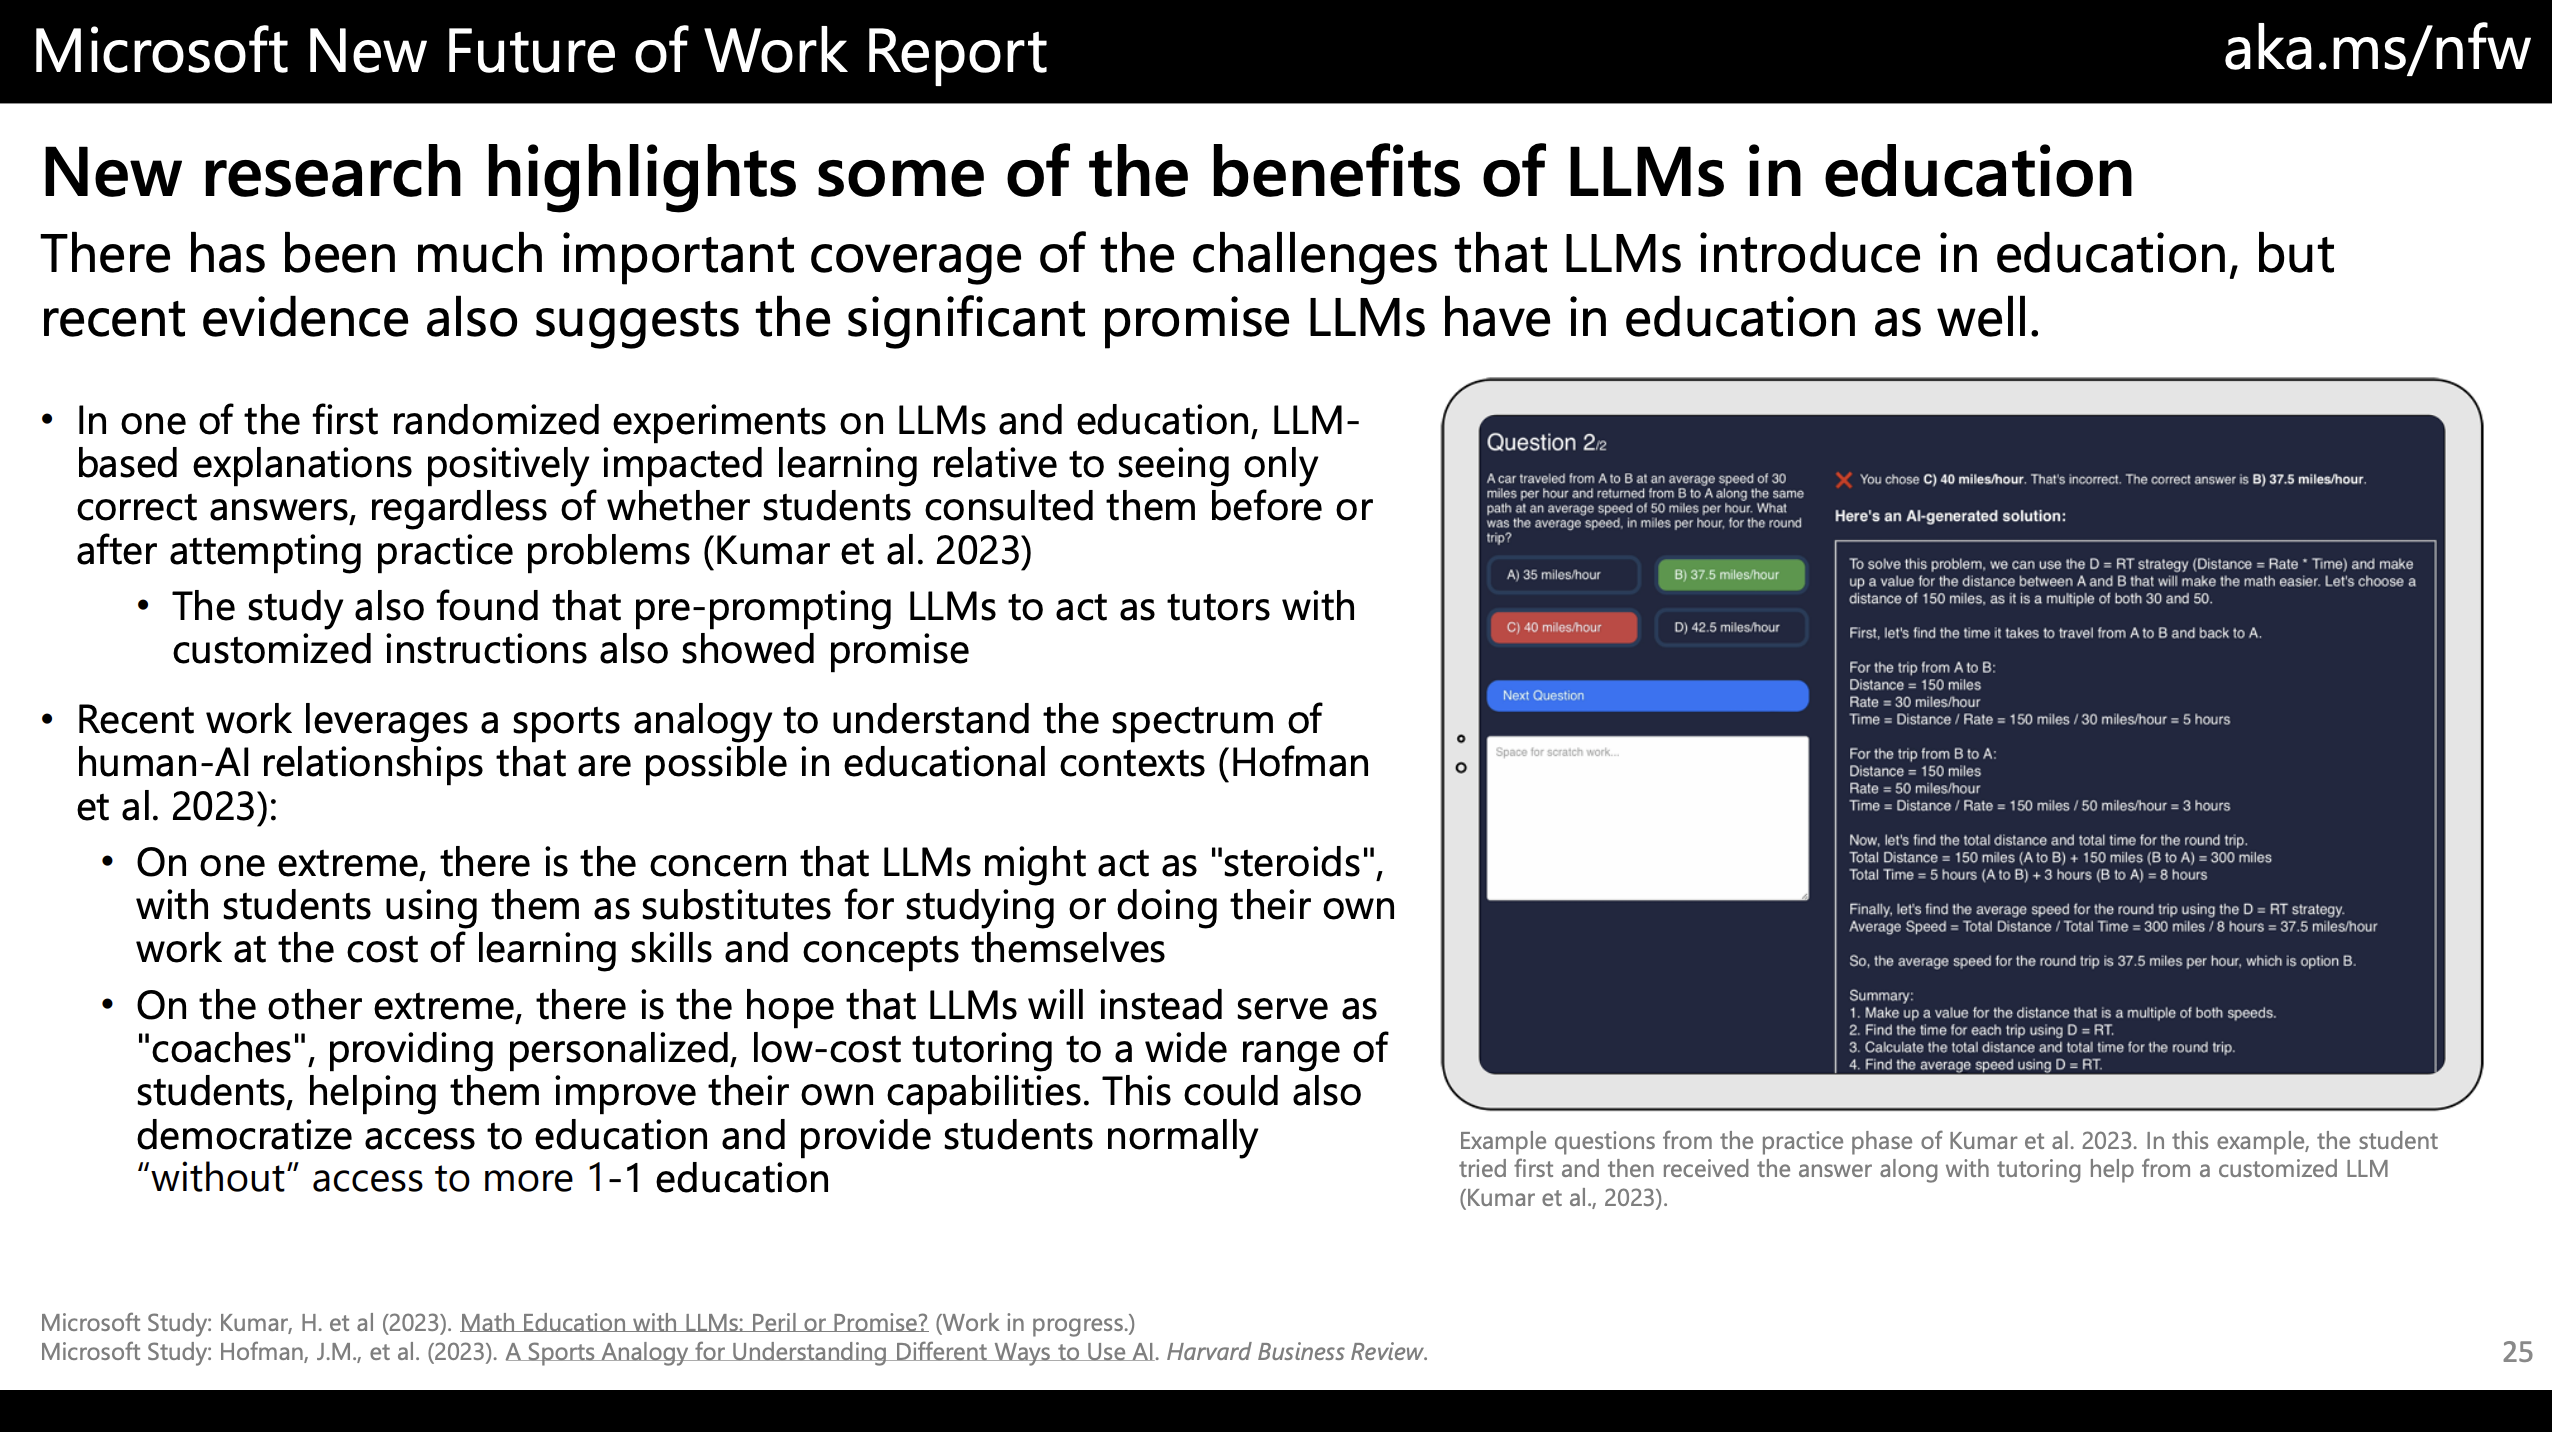 Math Education with LLMs